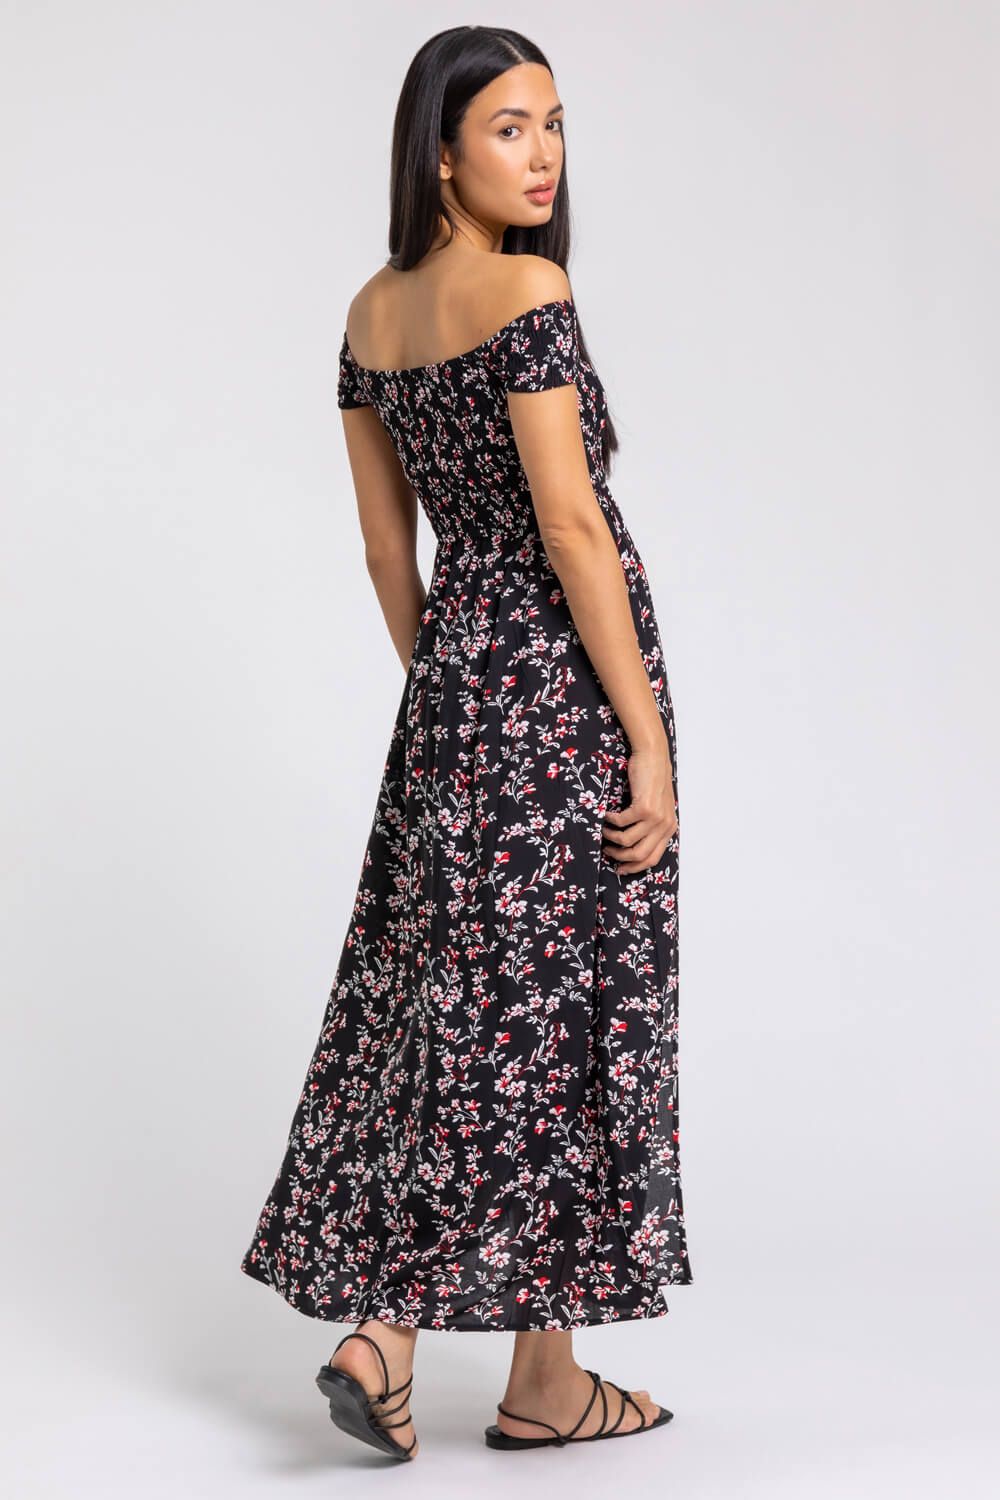 Black Shirred Floral Print Bardot Dress, Image 2 of 4